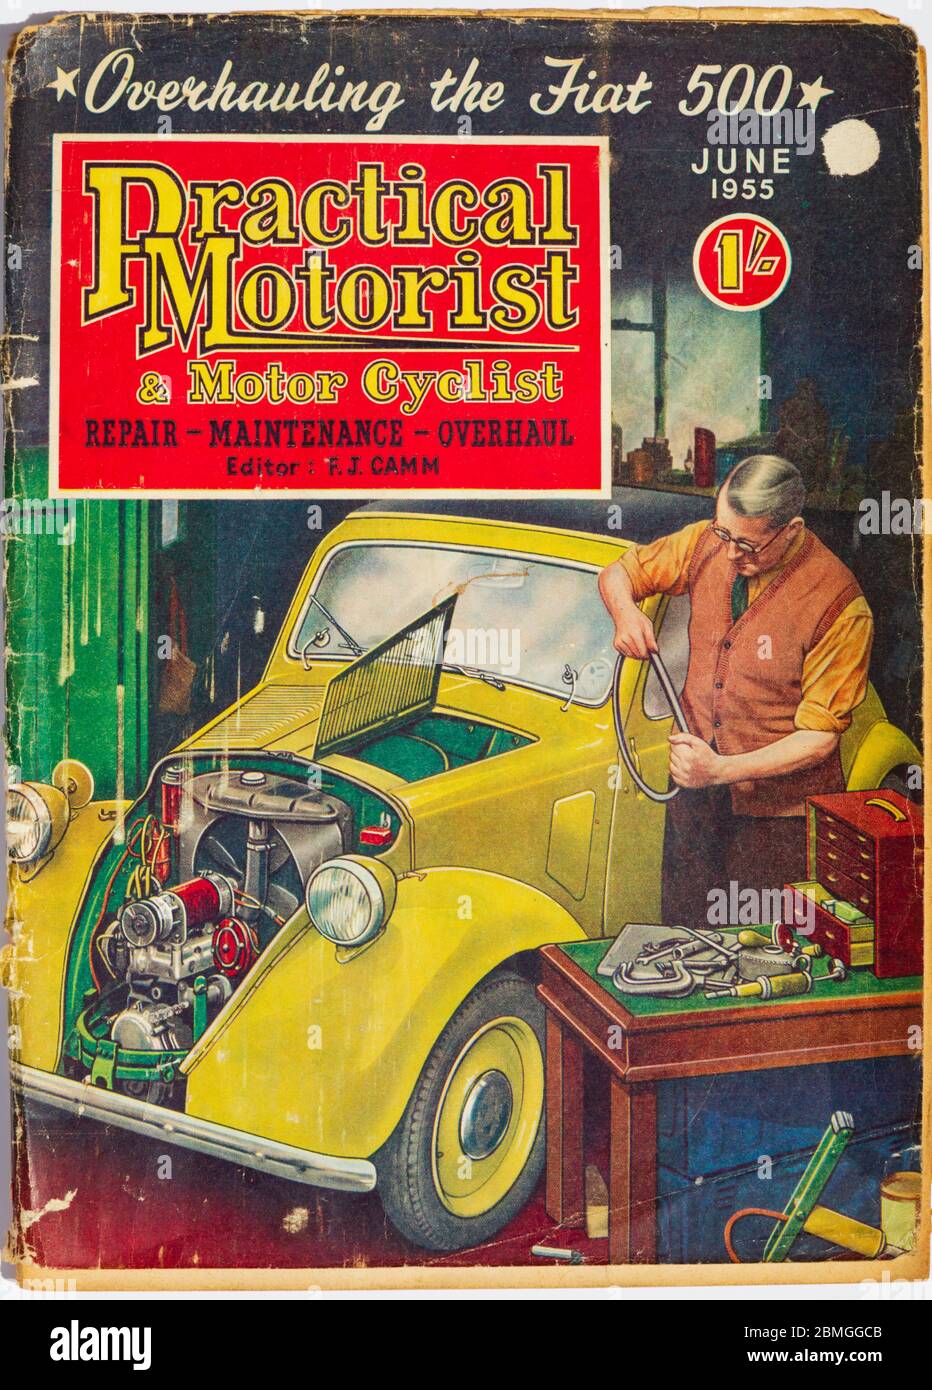 Juni 1955 Ausgabe des Praxismotoristen und Motor Cyclist Magazin Farbvorband mit Fial 500 Modell A Topolino. Preis 1/- Stockfoto